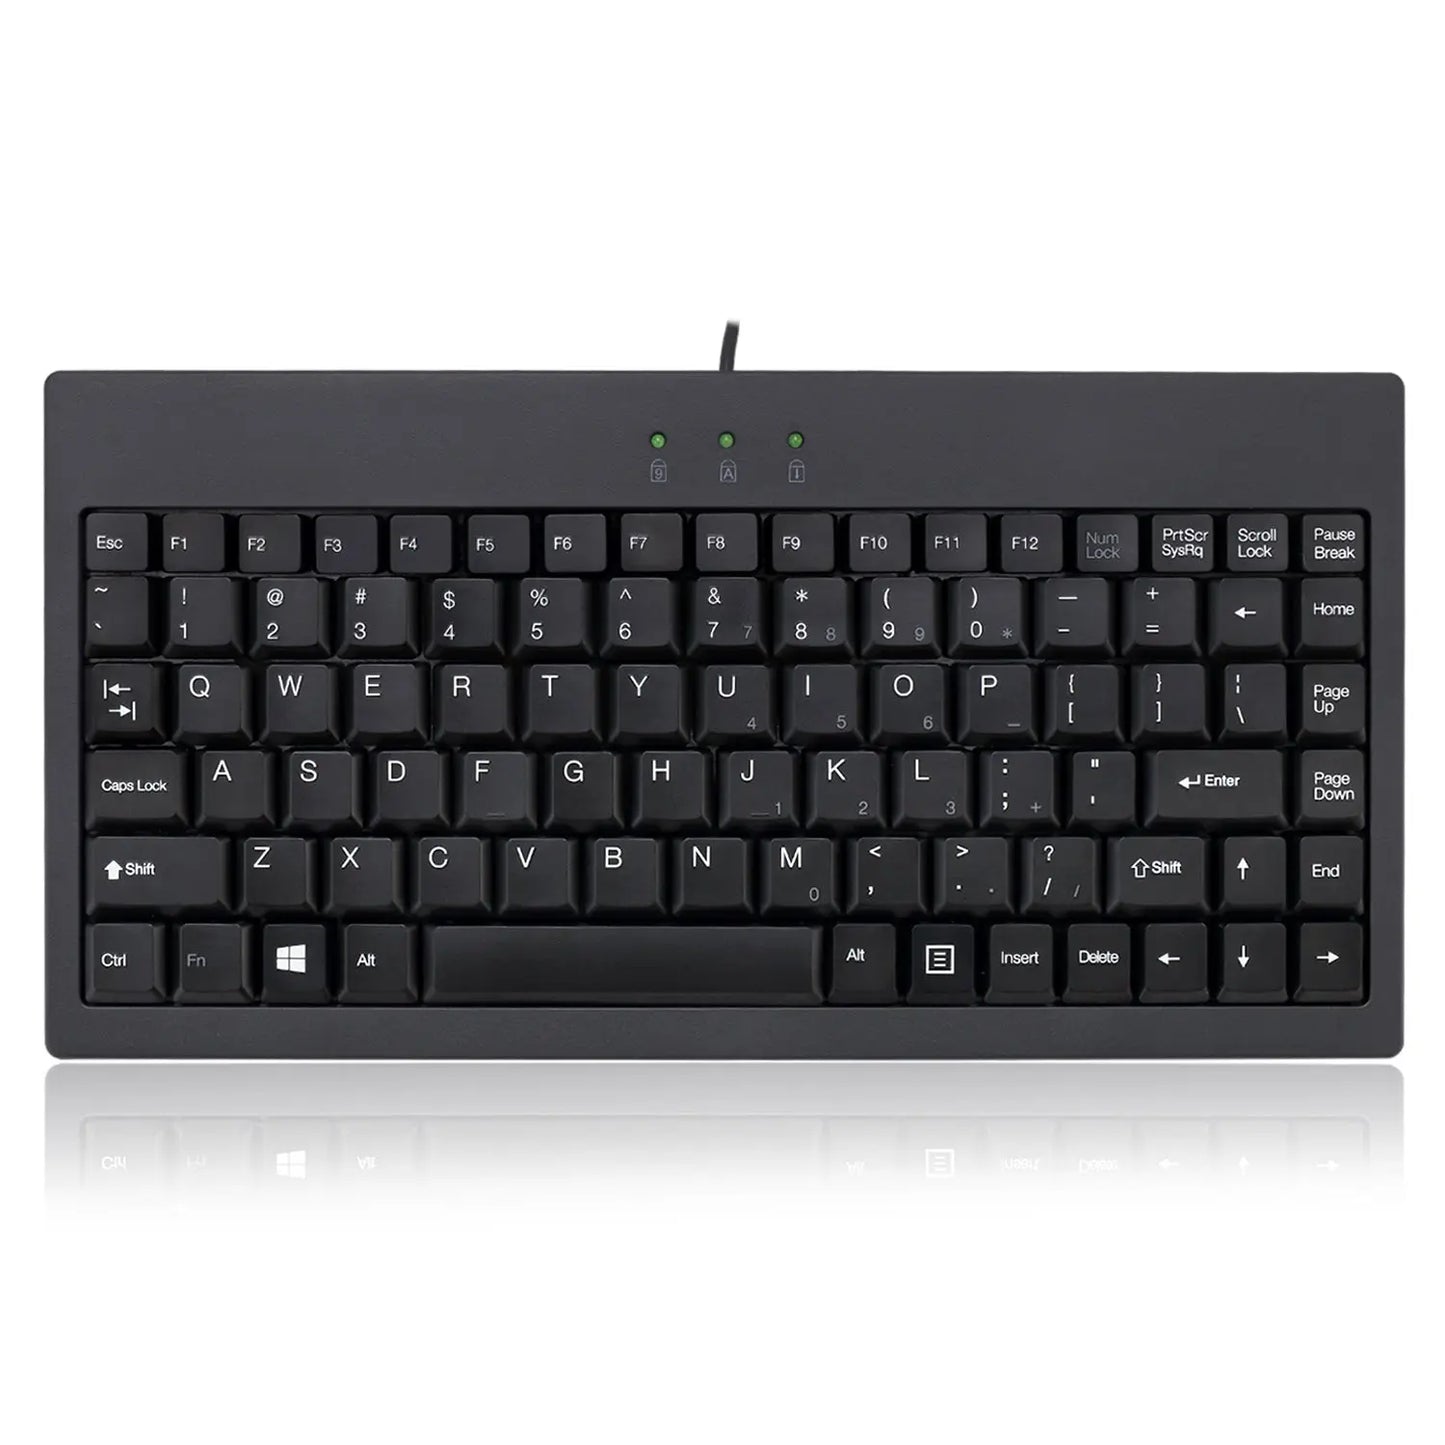 Adesso AKB-110B - Mini toetsenbord - Bedraad USB - Zwart Adesso